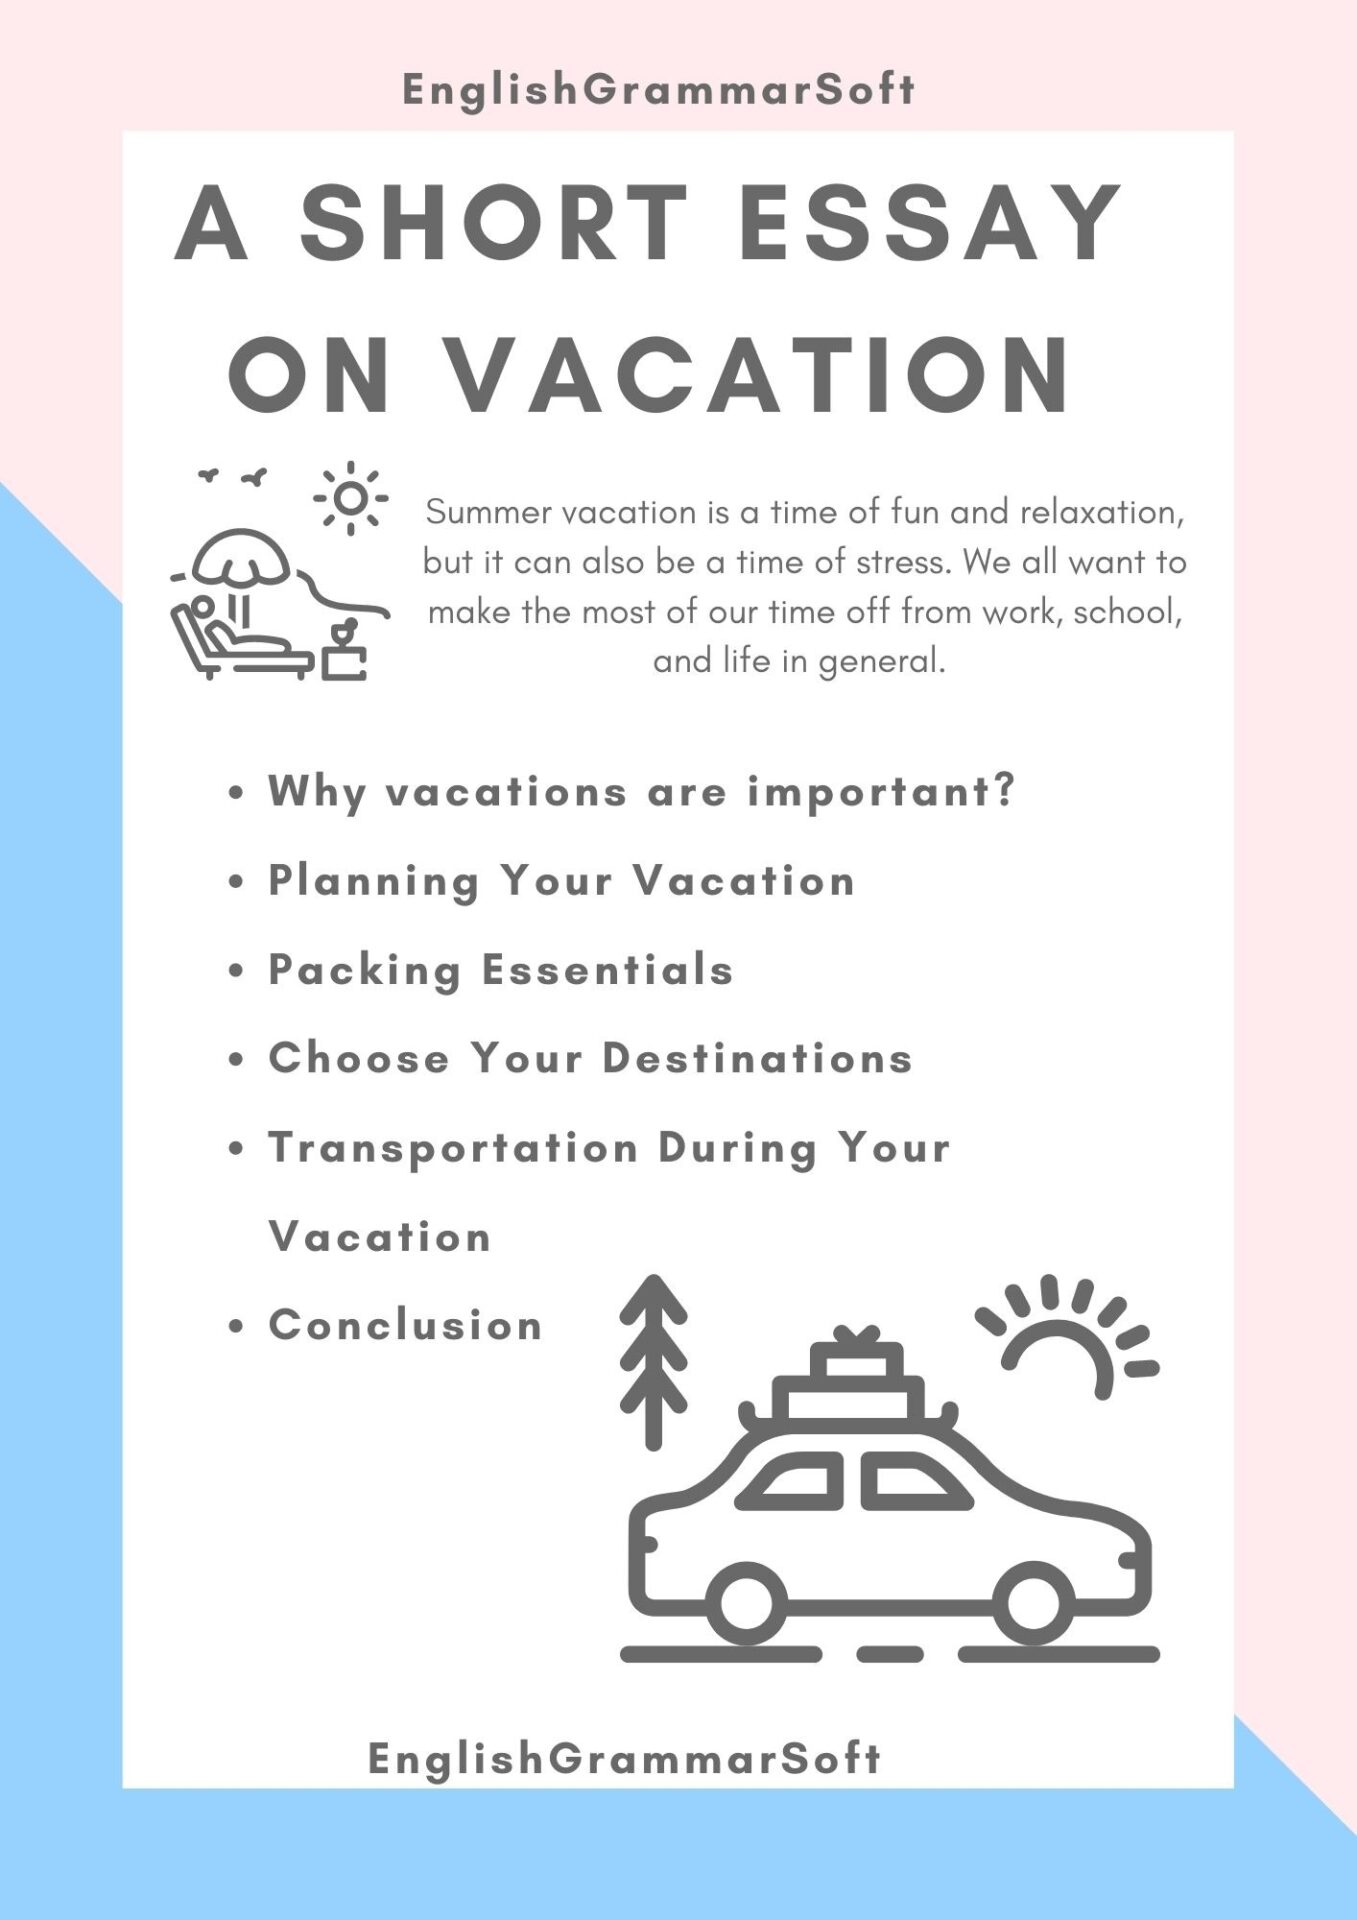 Essay on Vacation